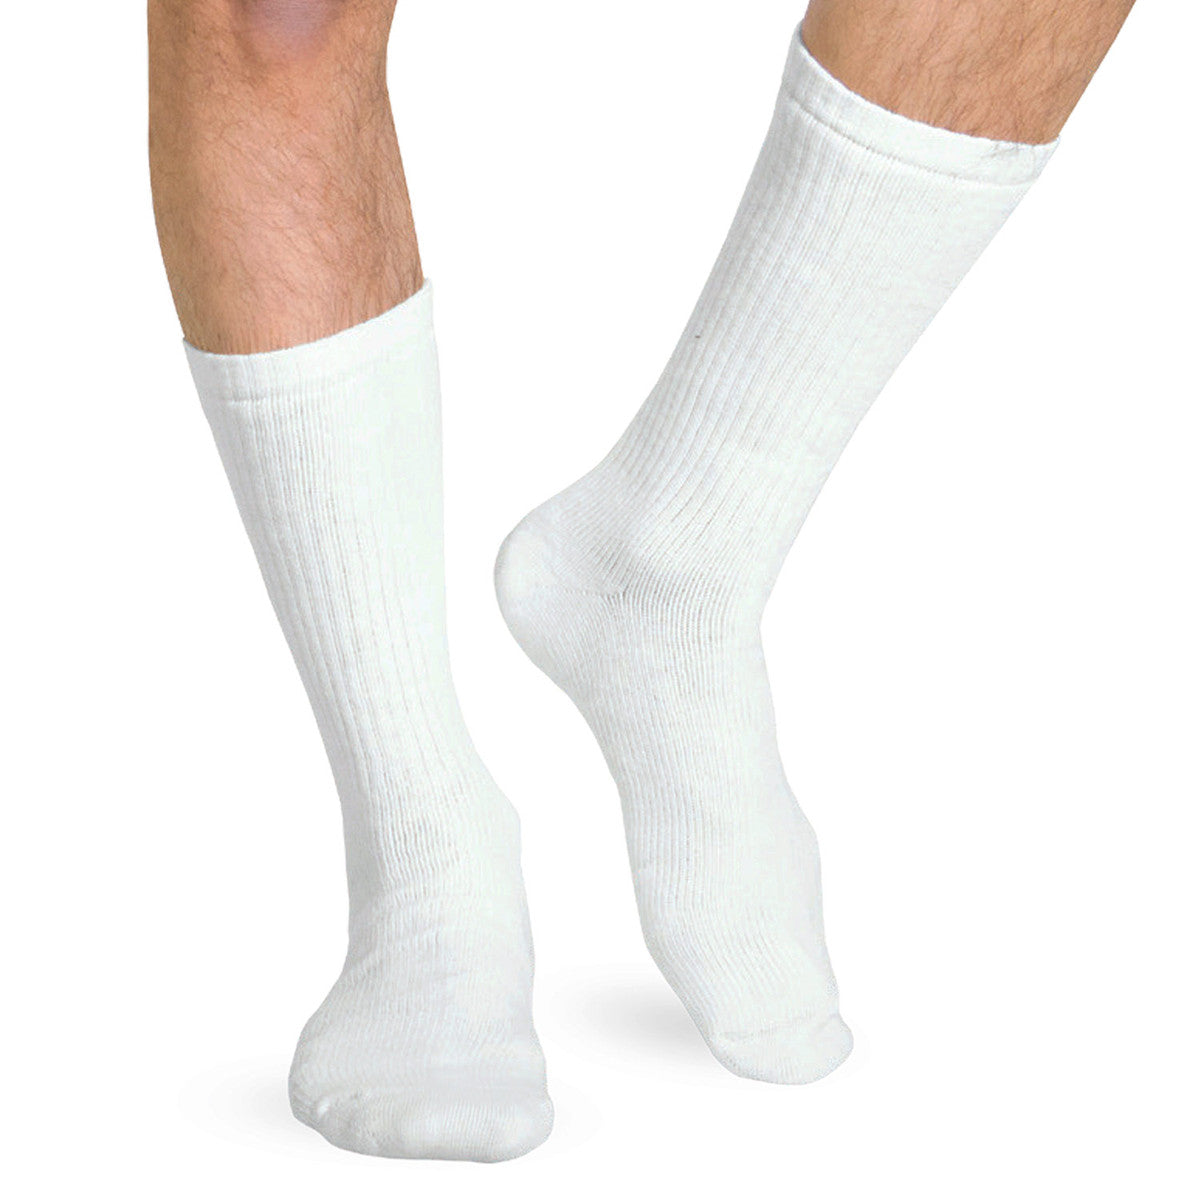 Heelbo Unisex Diabetic Compression Crew Length Socks - Black or White - Senior.com Compression Socks